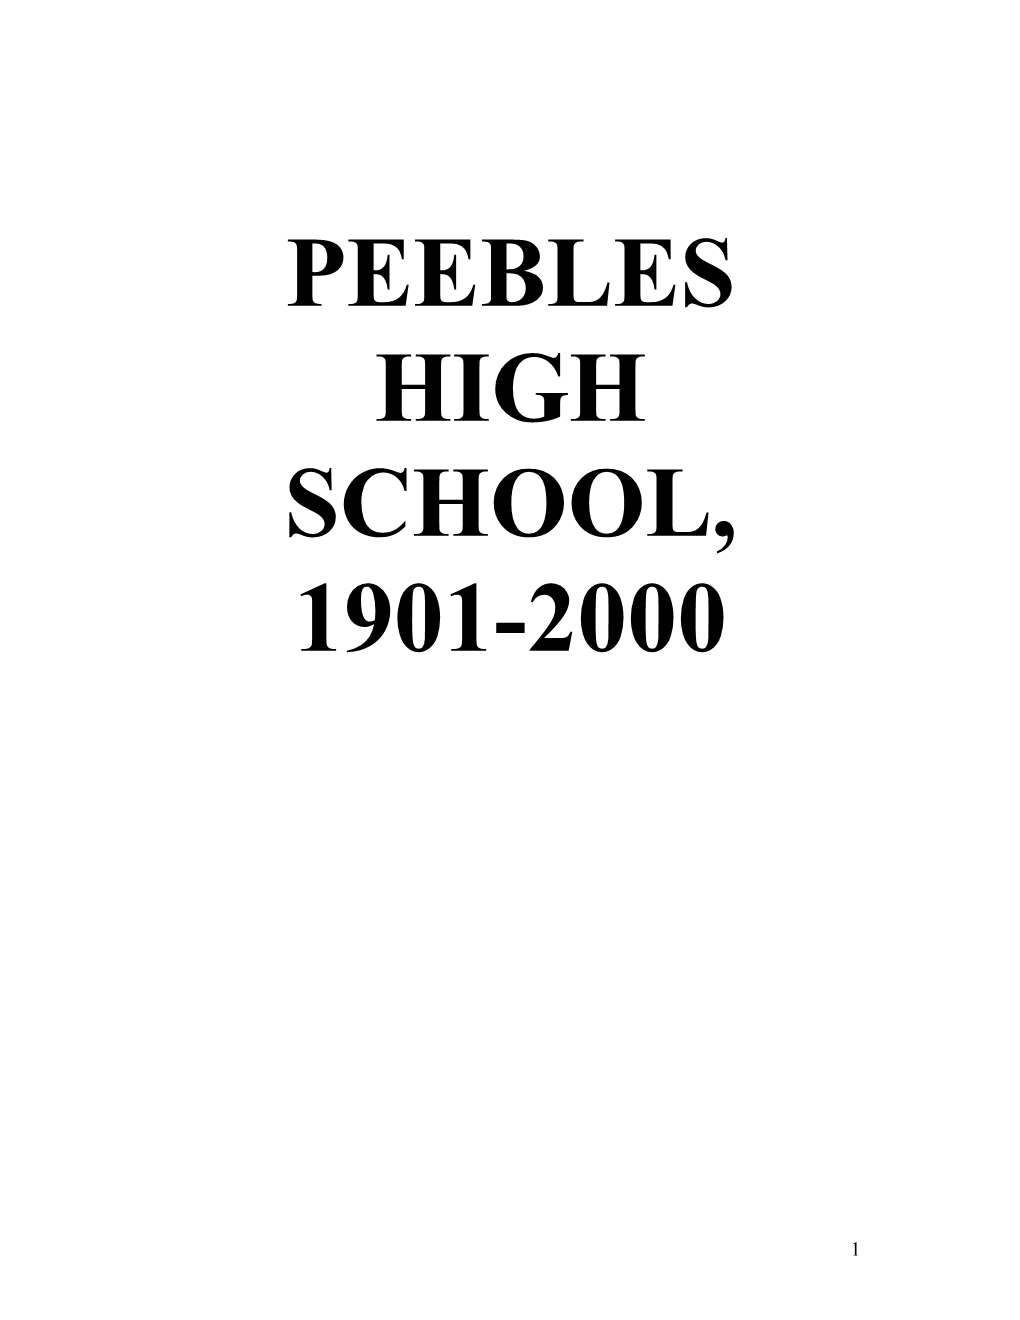 Peebles High School, 1901-2000